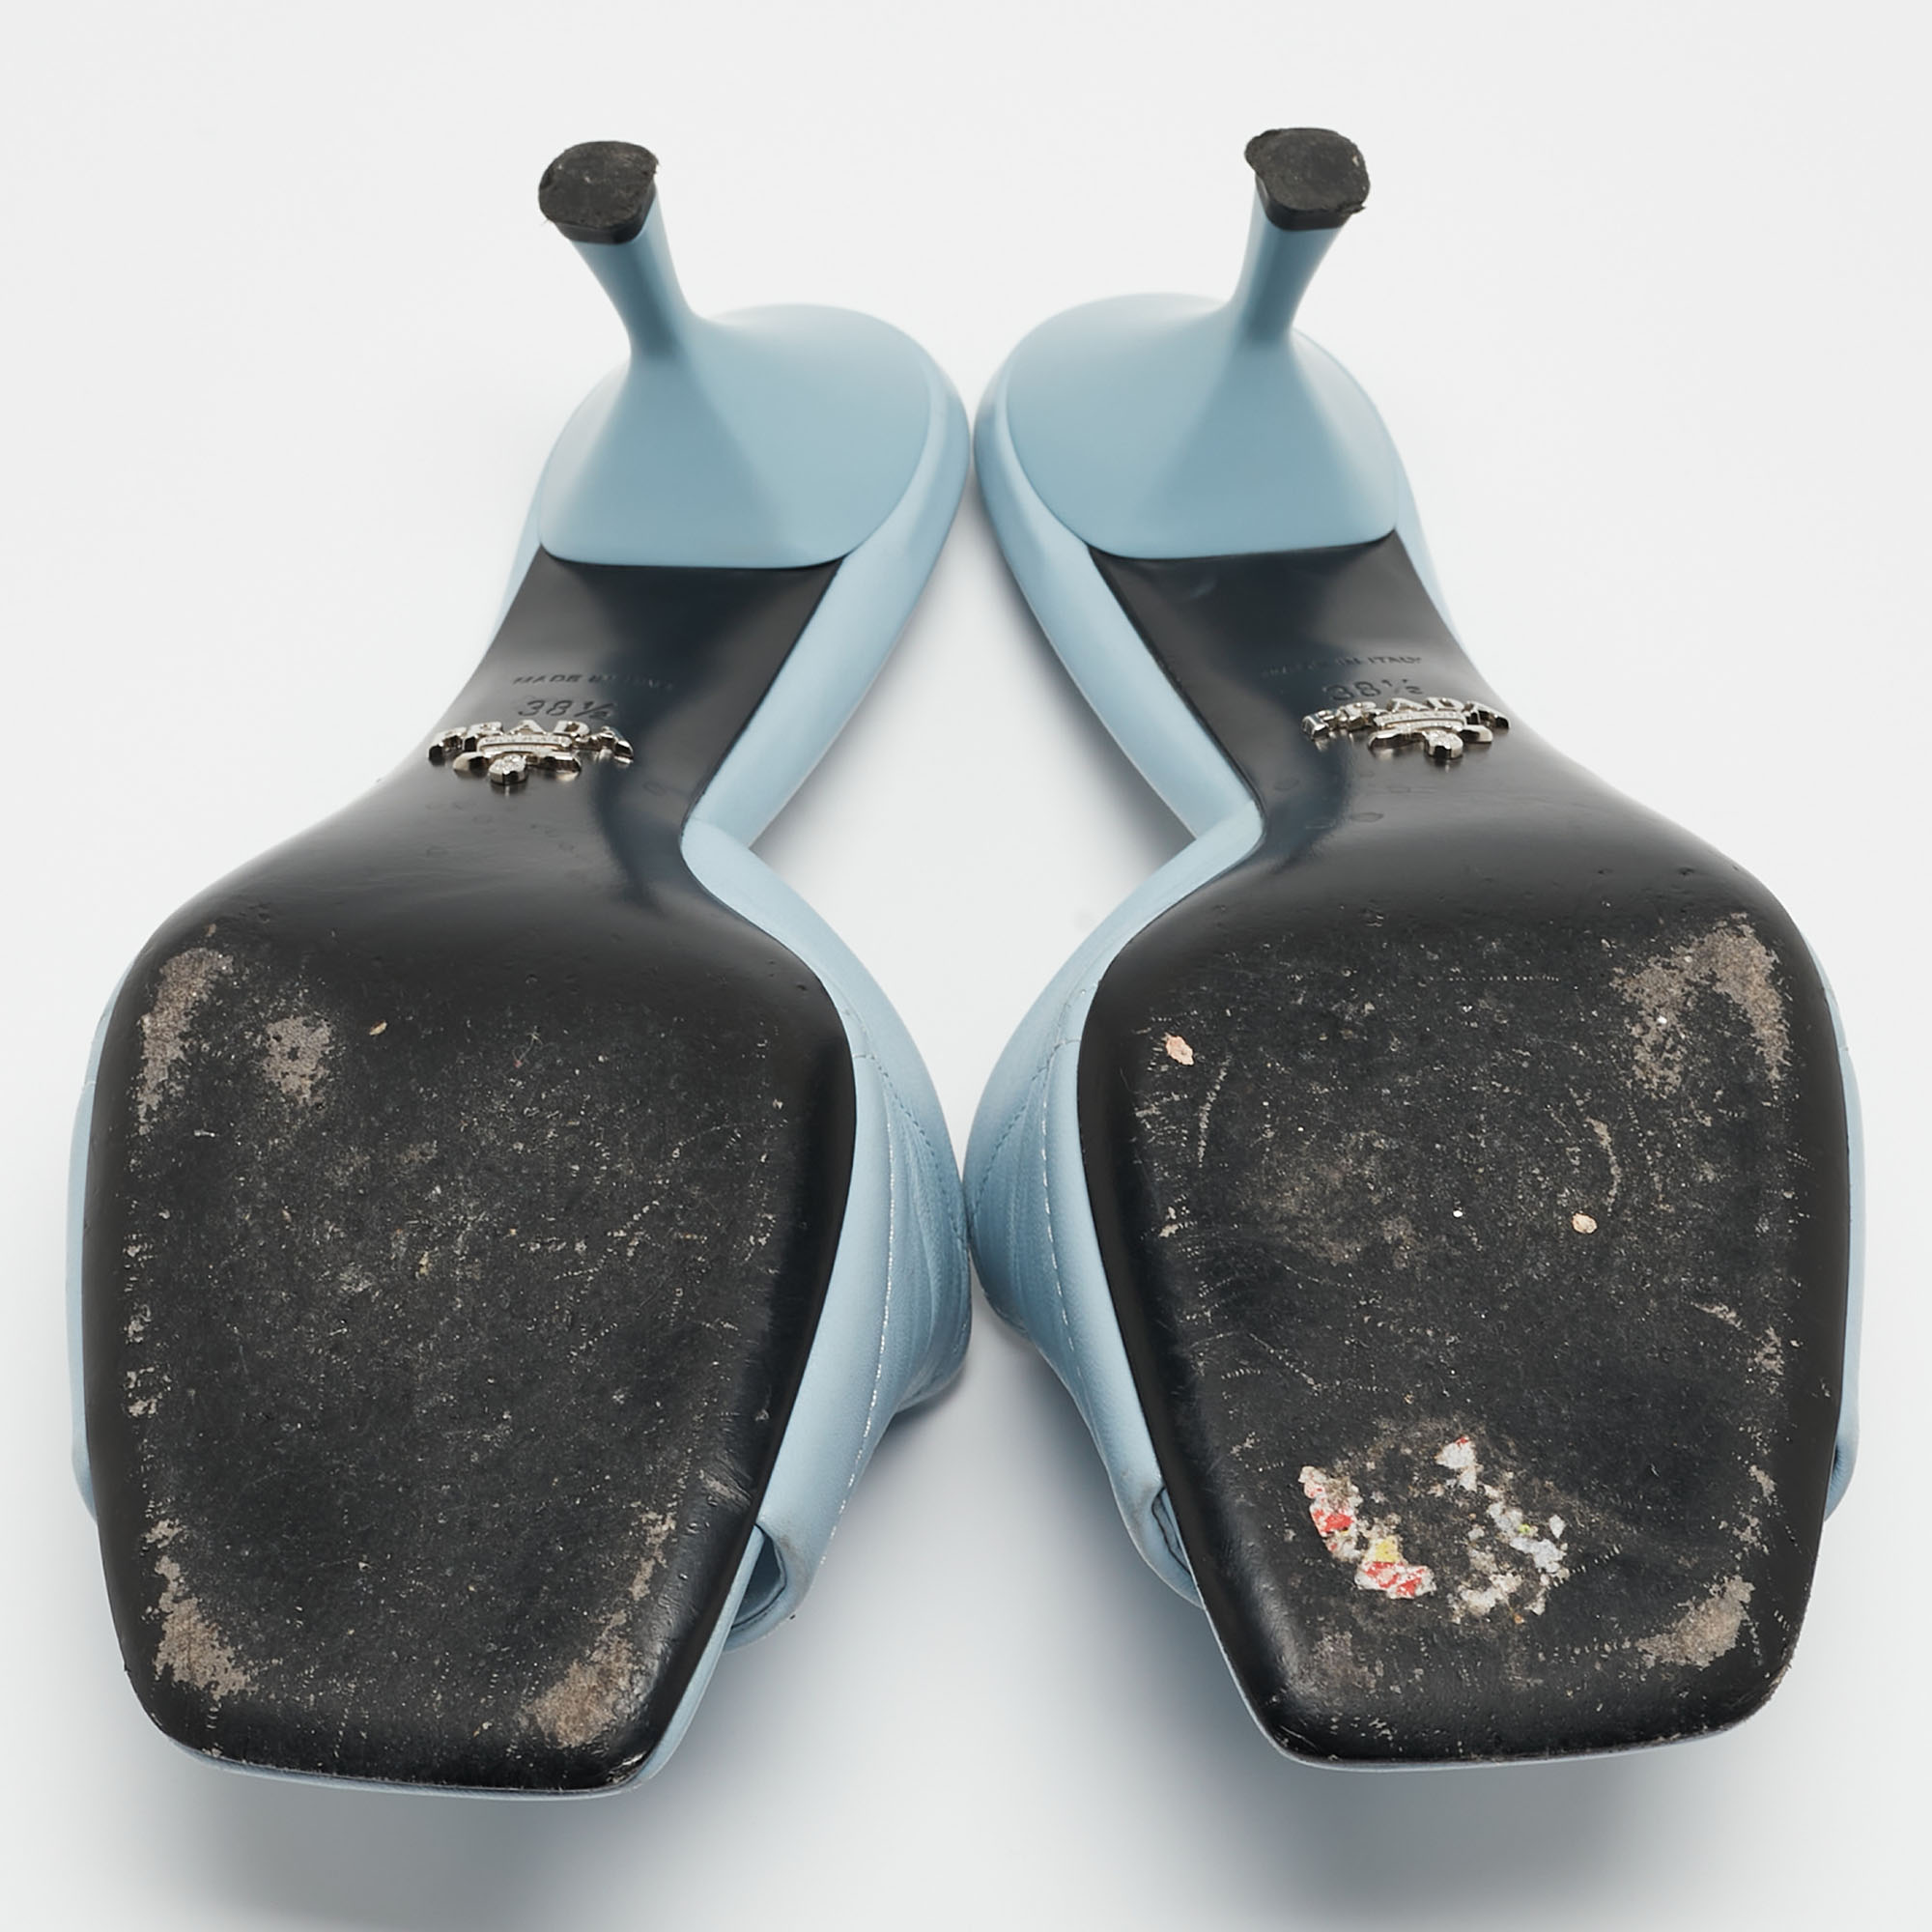 Prada Blue Quilted Leather Logo Slide Sandals Size 38.5